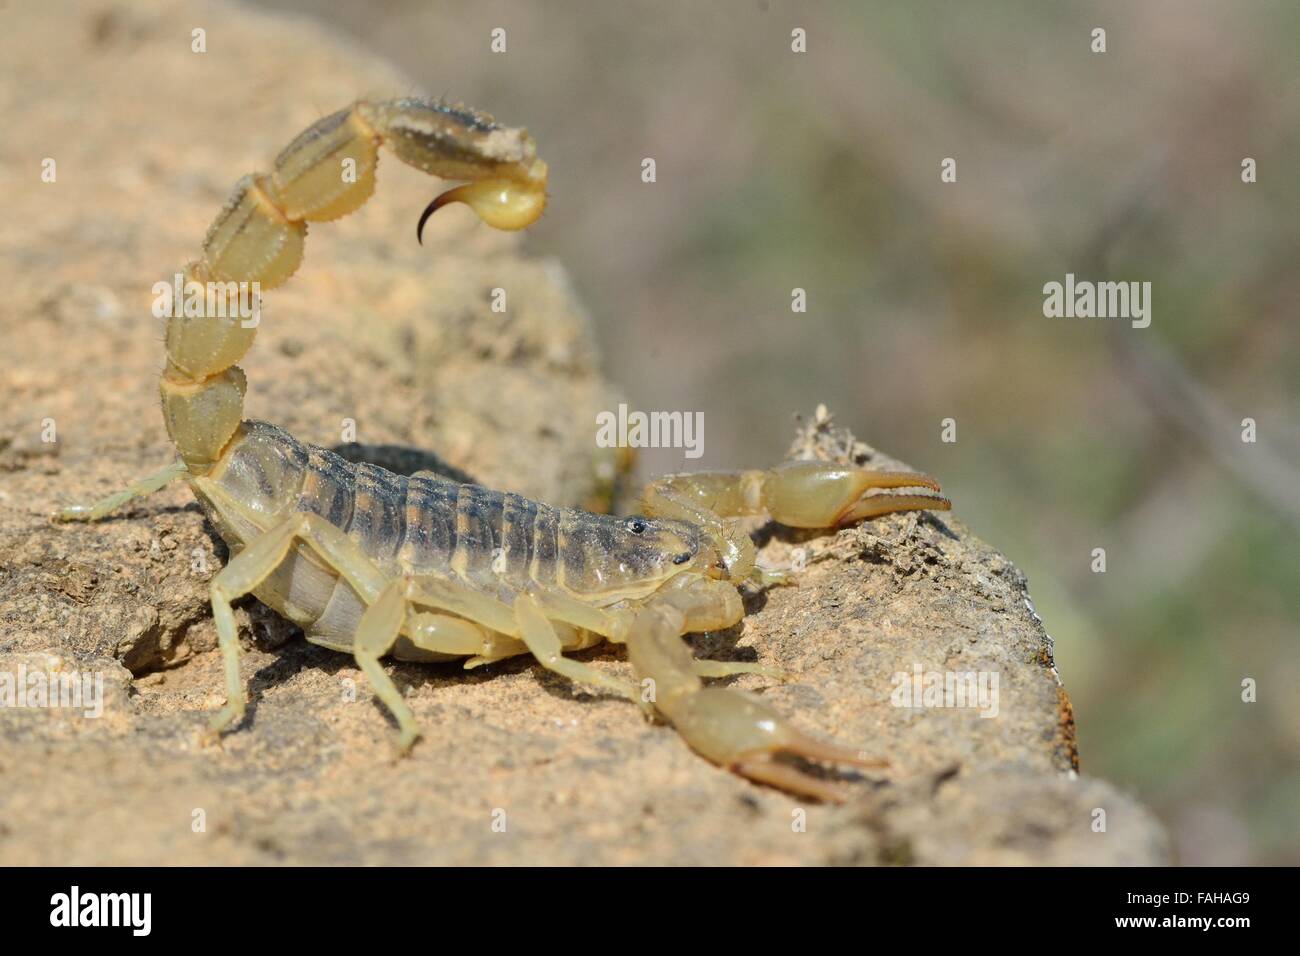 Common yellow scorpion (Buthus occitanus) in defensive posture in Azerbaijan. A scorpion in the family Buthidae Stock Photo